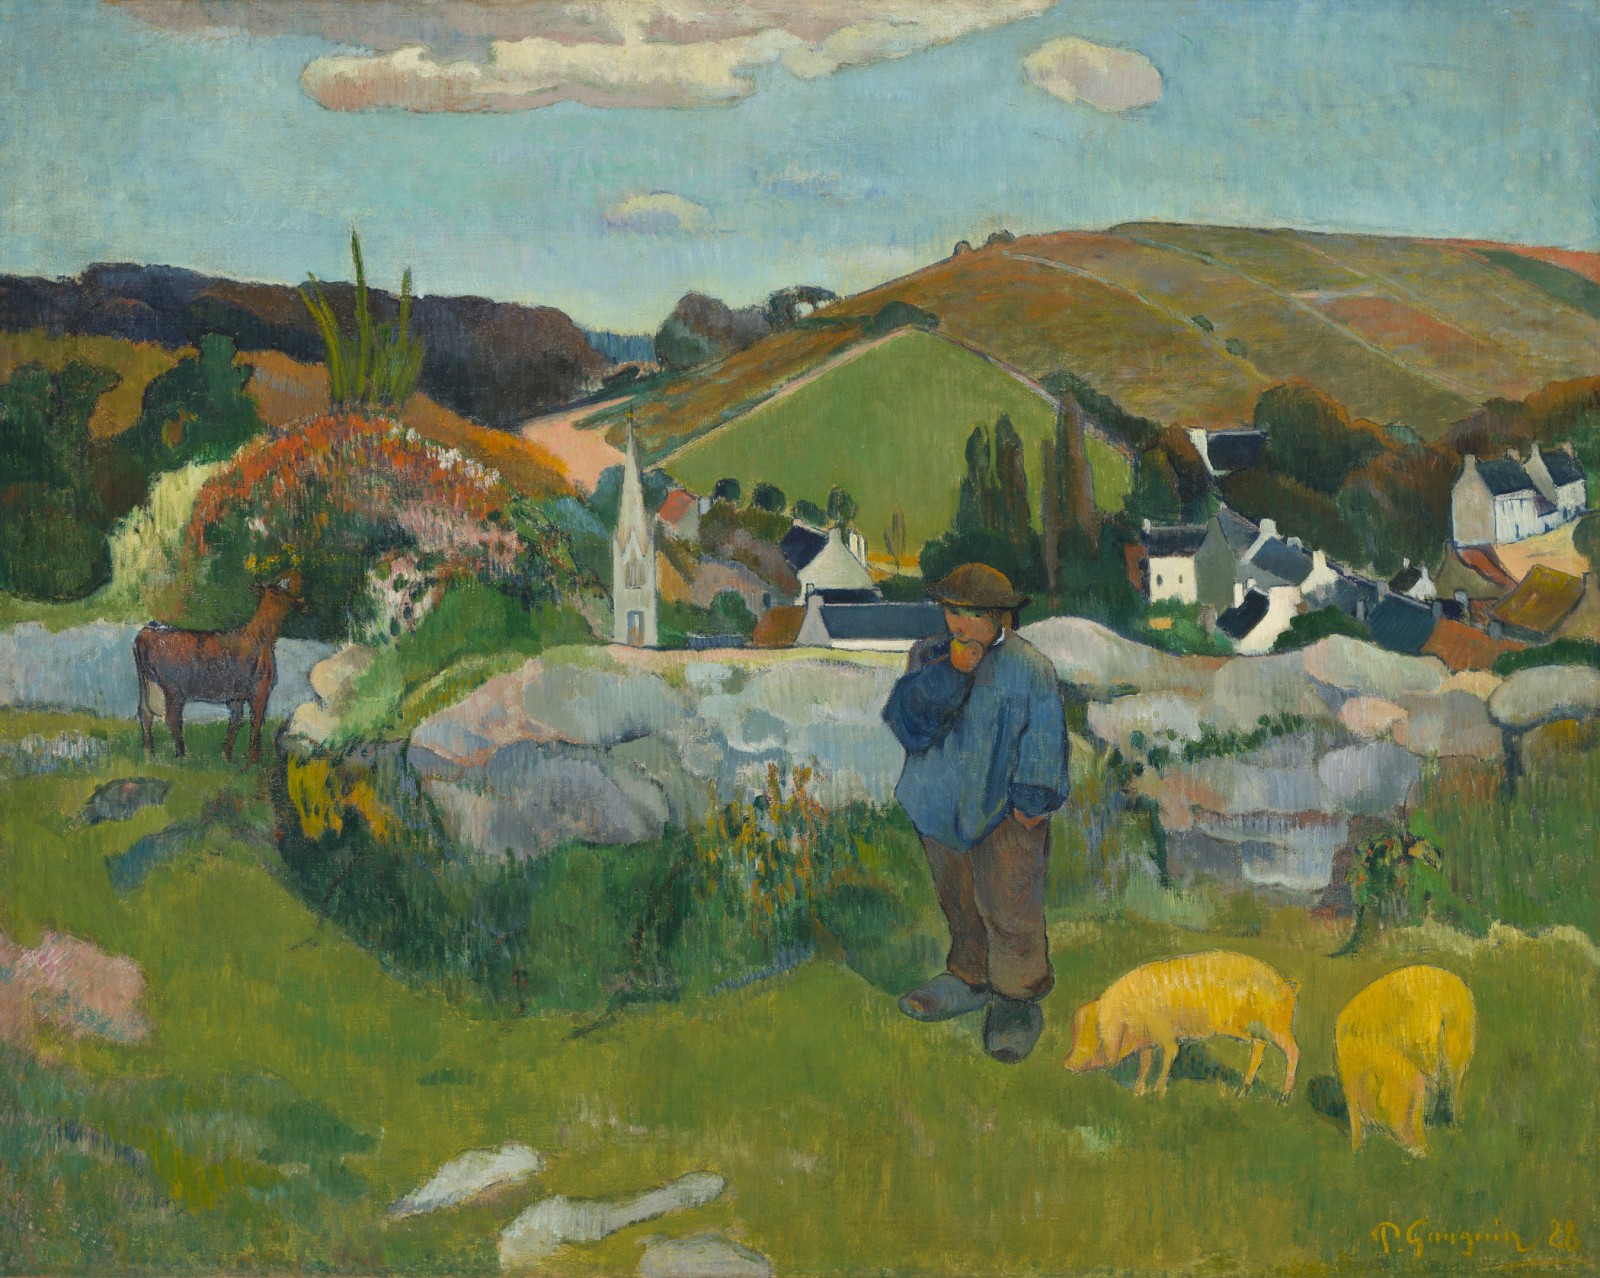 Image: Paul Gauguin, The Swineherd (Le Gardien de porcs), 1888